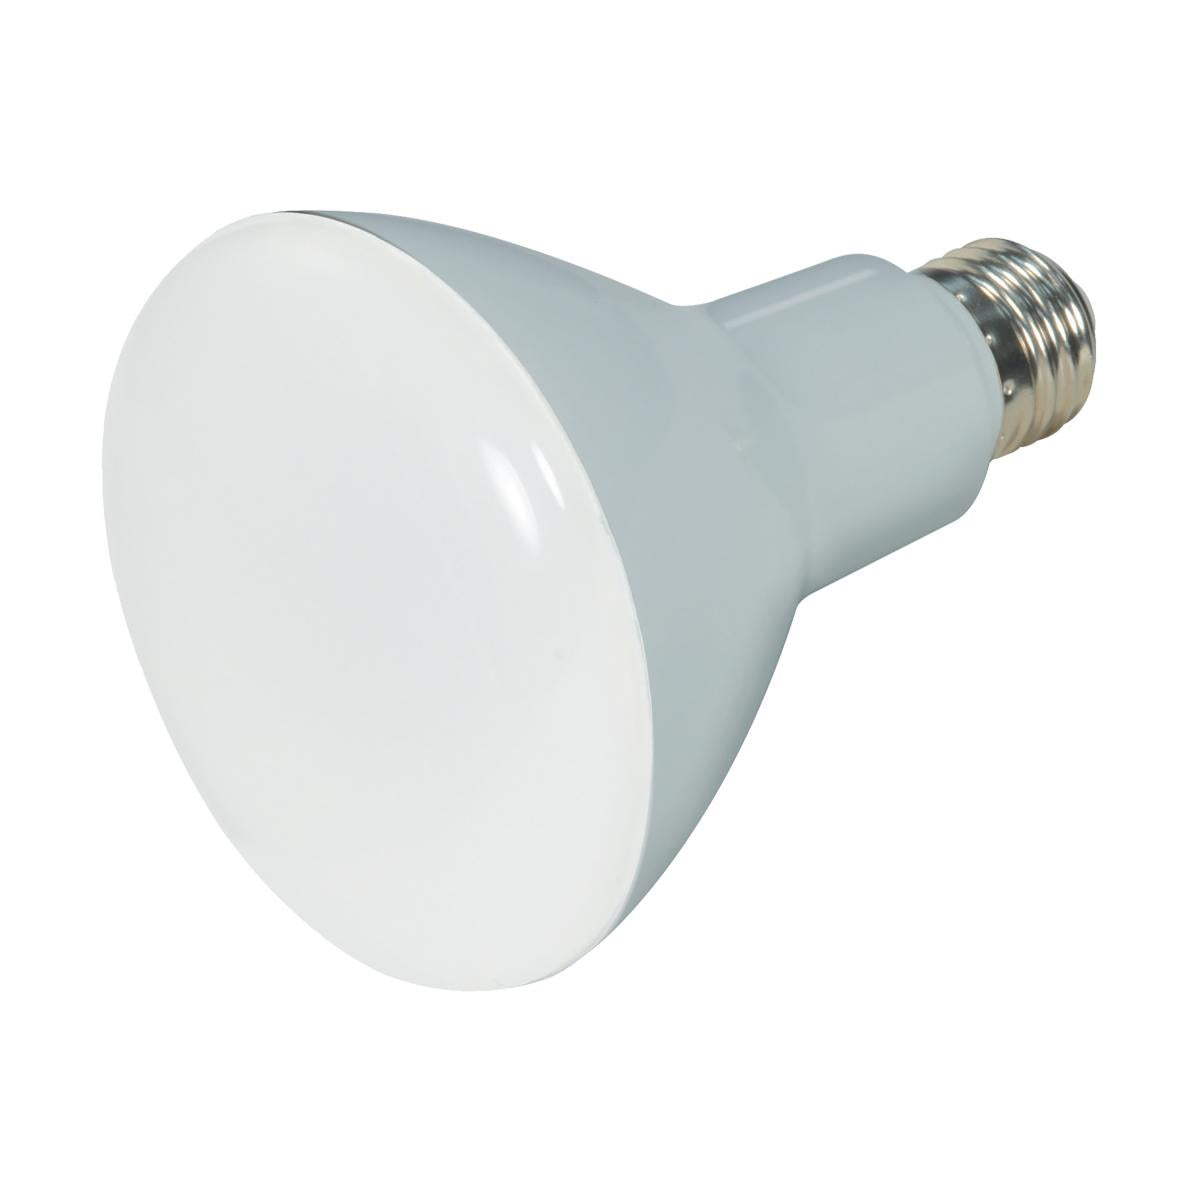 LED R30/BR30 Reflector bulb, 7 watt, 650 Lumens, 3500K, E26 Medium Base, 105 Deg. Flood